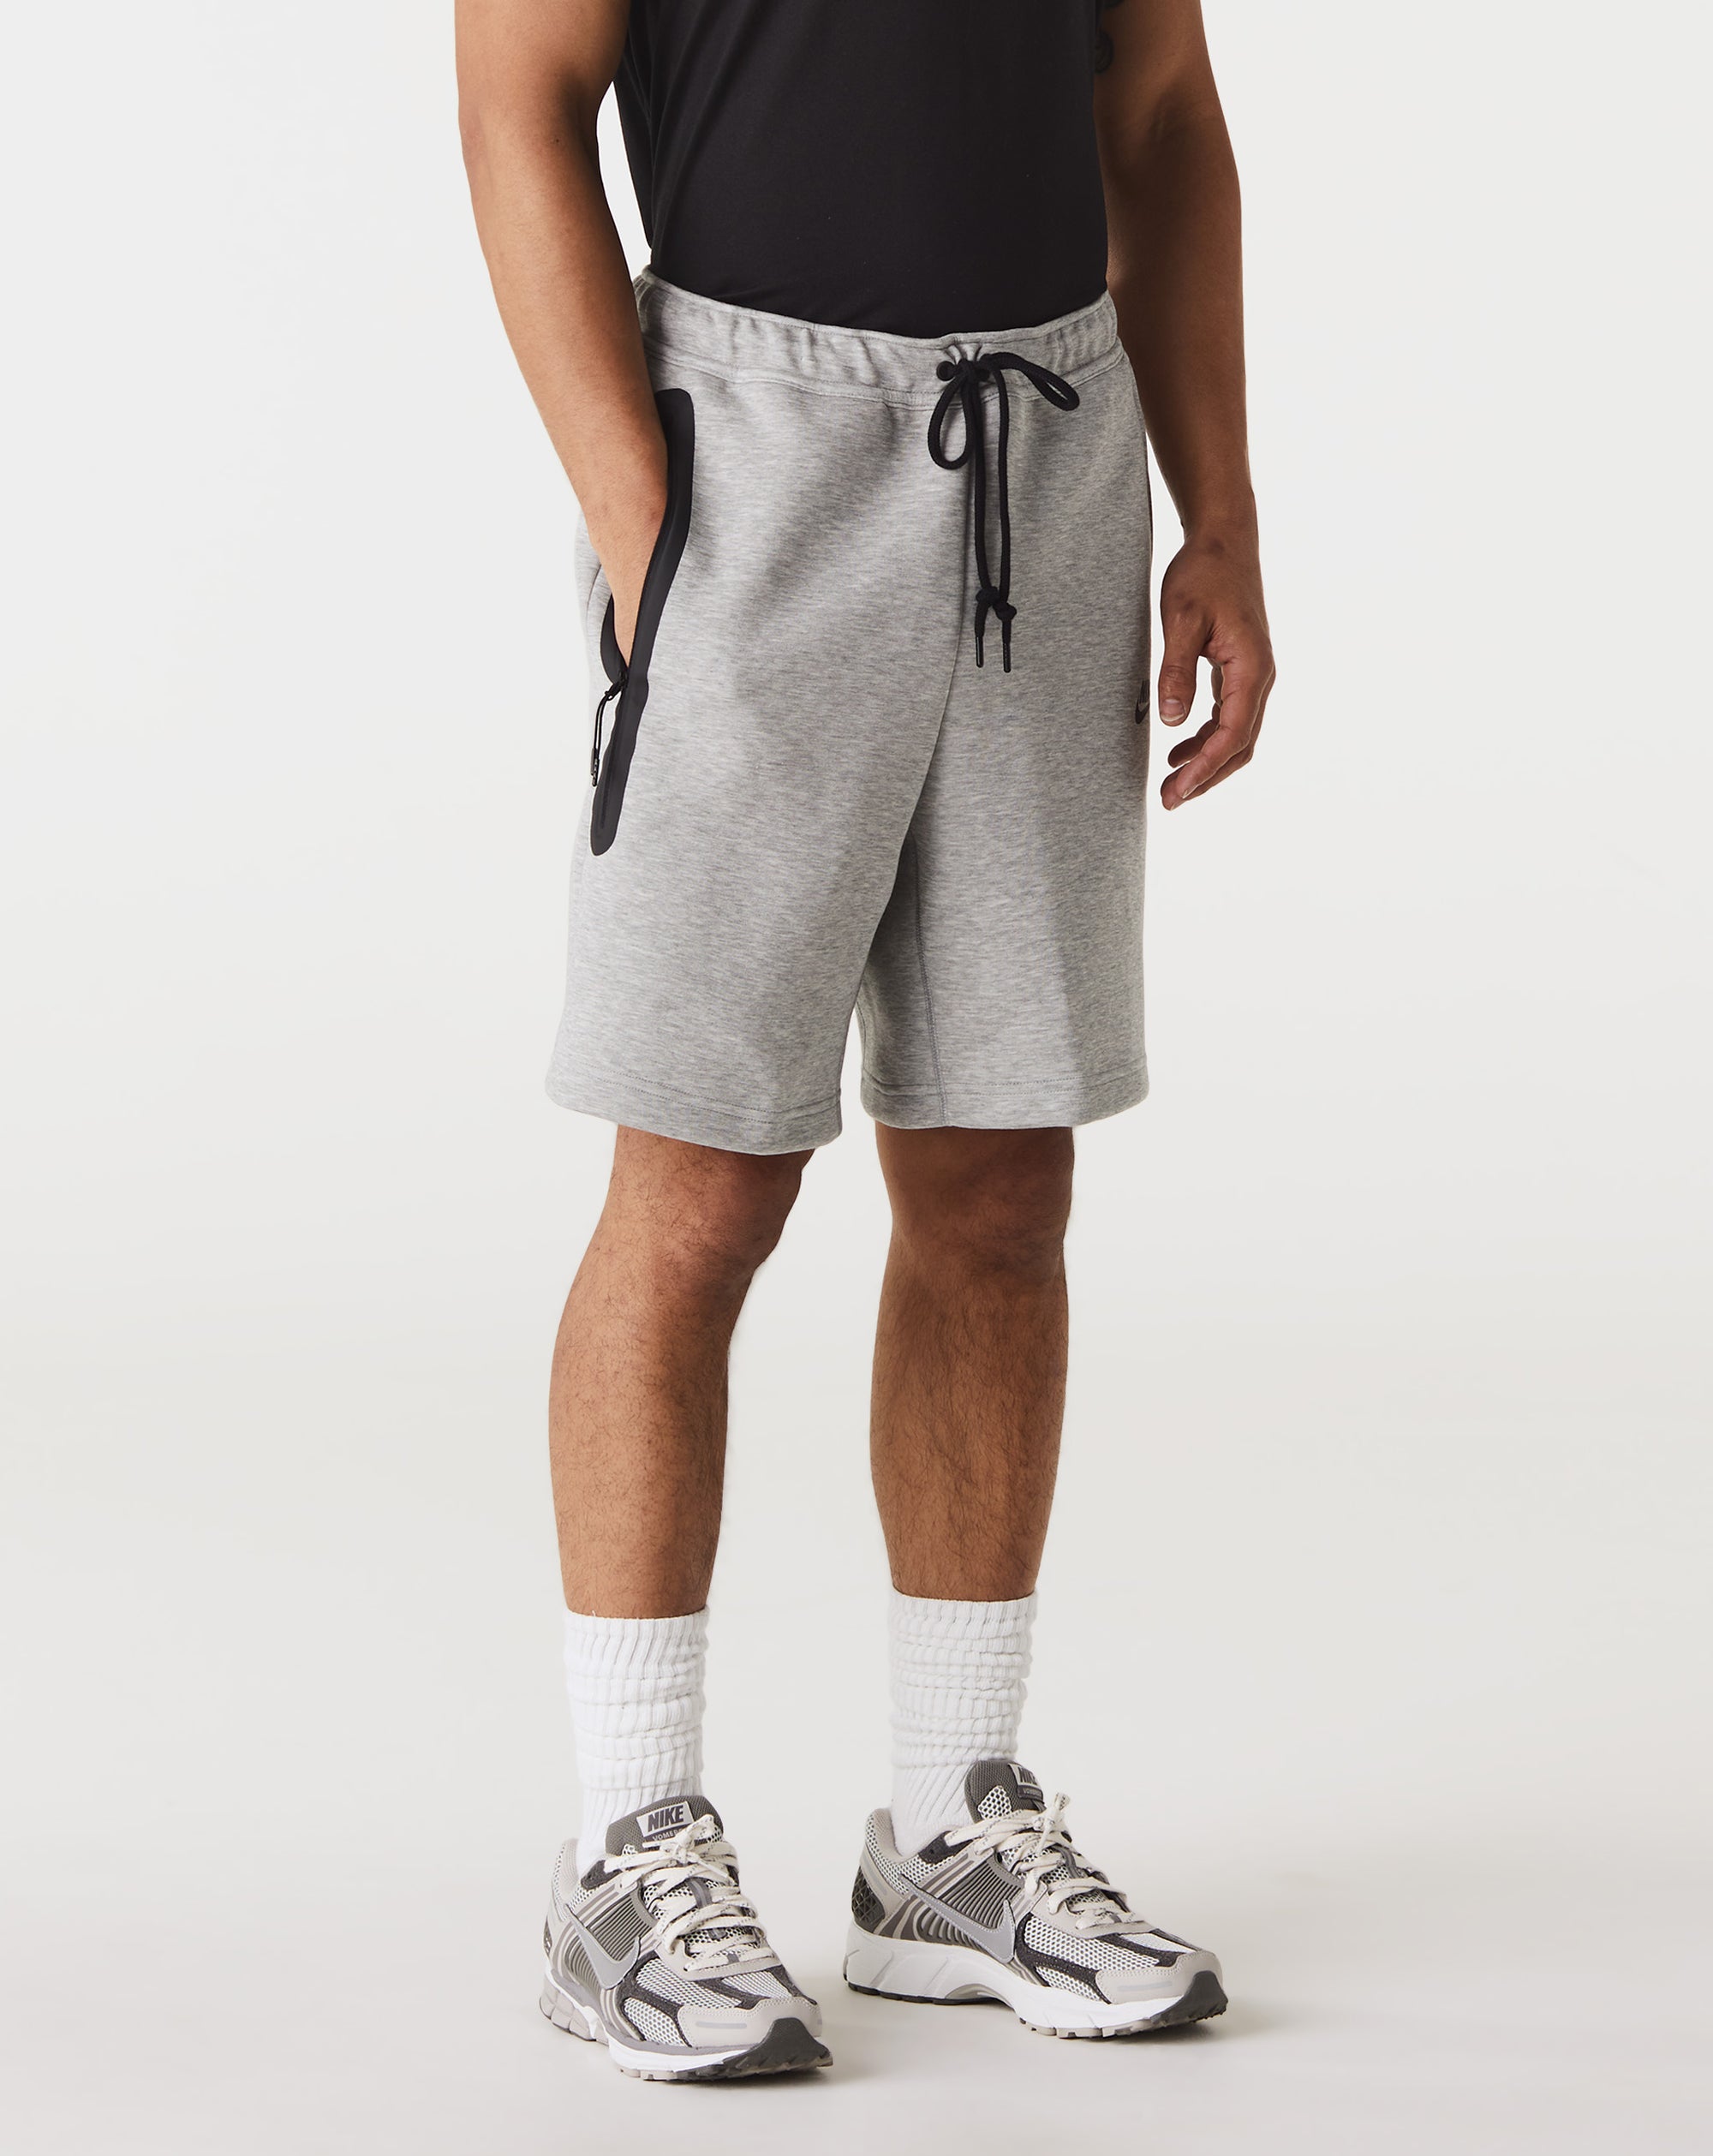 Nike Tech Fleece Shorts - Rule of Next Apparel